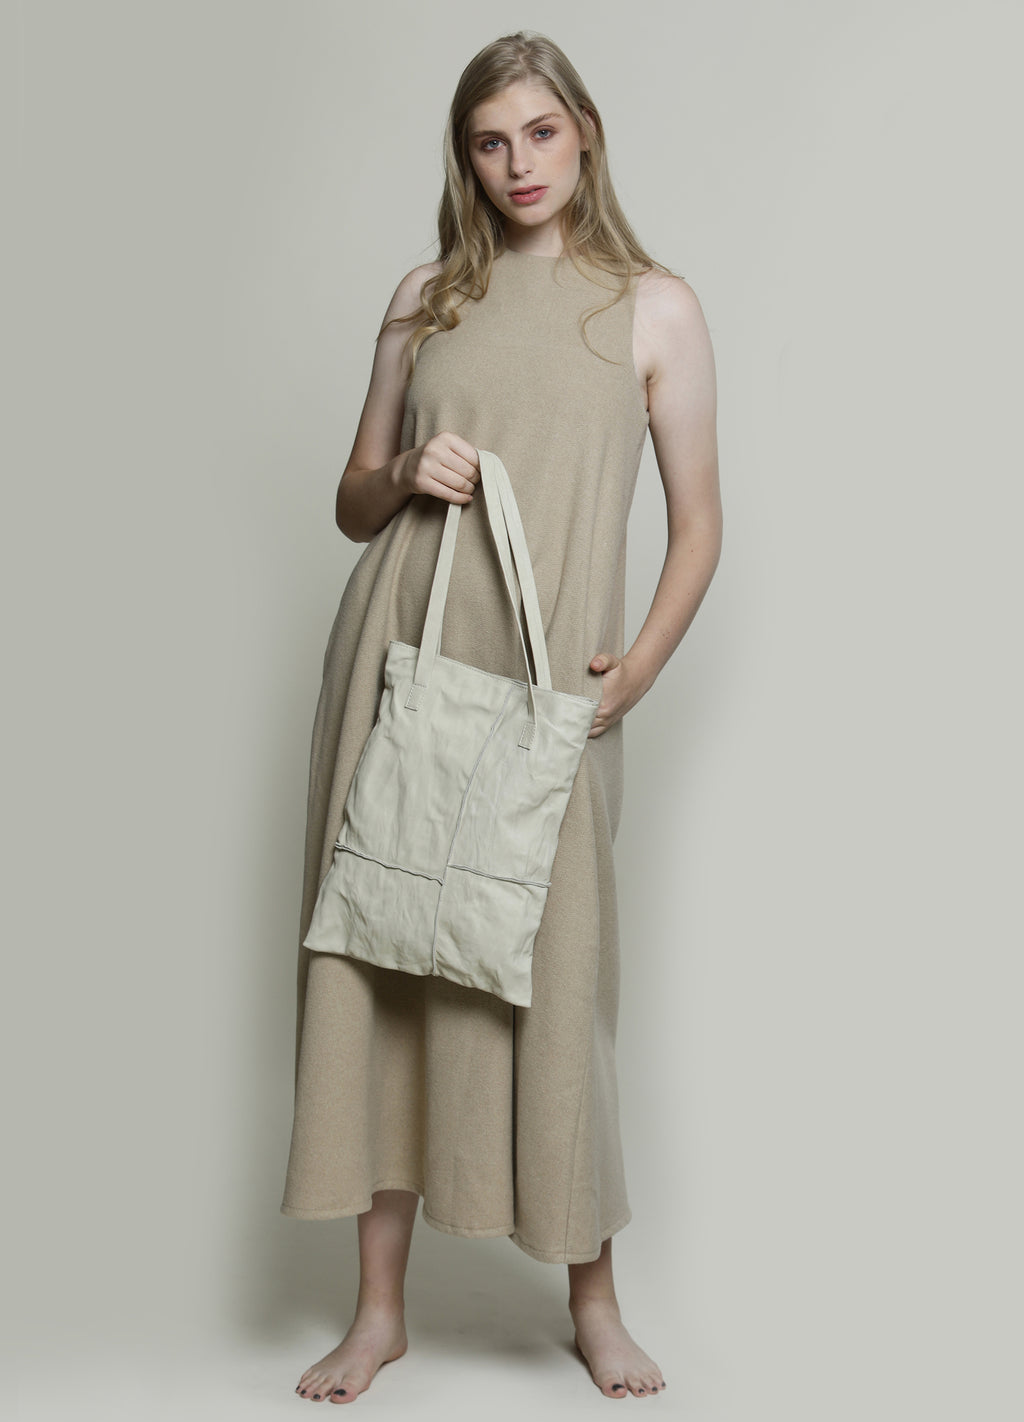 Brick Brown Leather Foldover Crossbody Bag – Caroline Mazurik Handbags